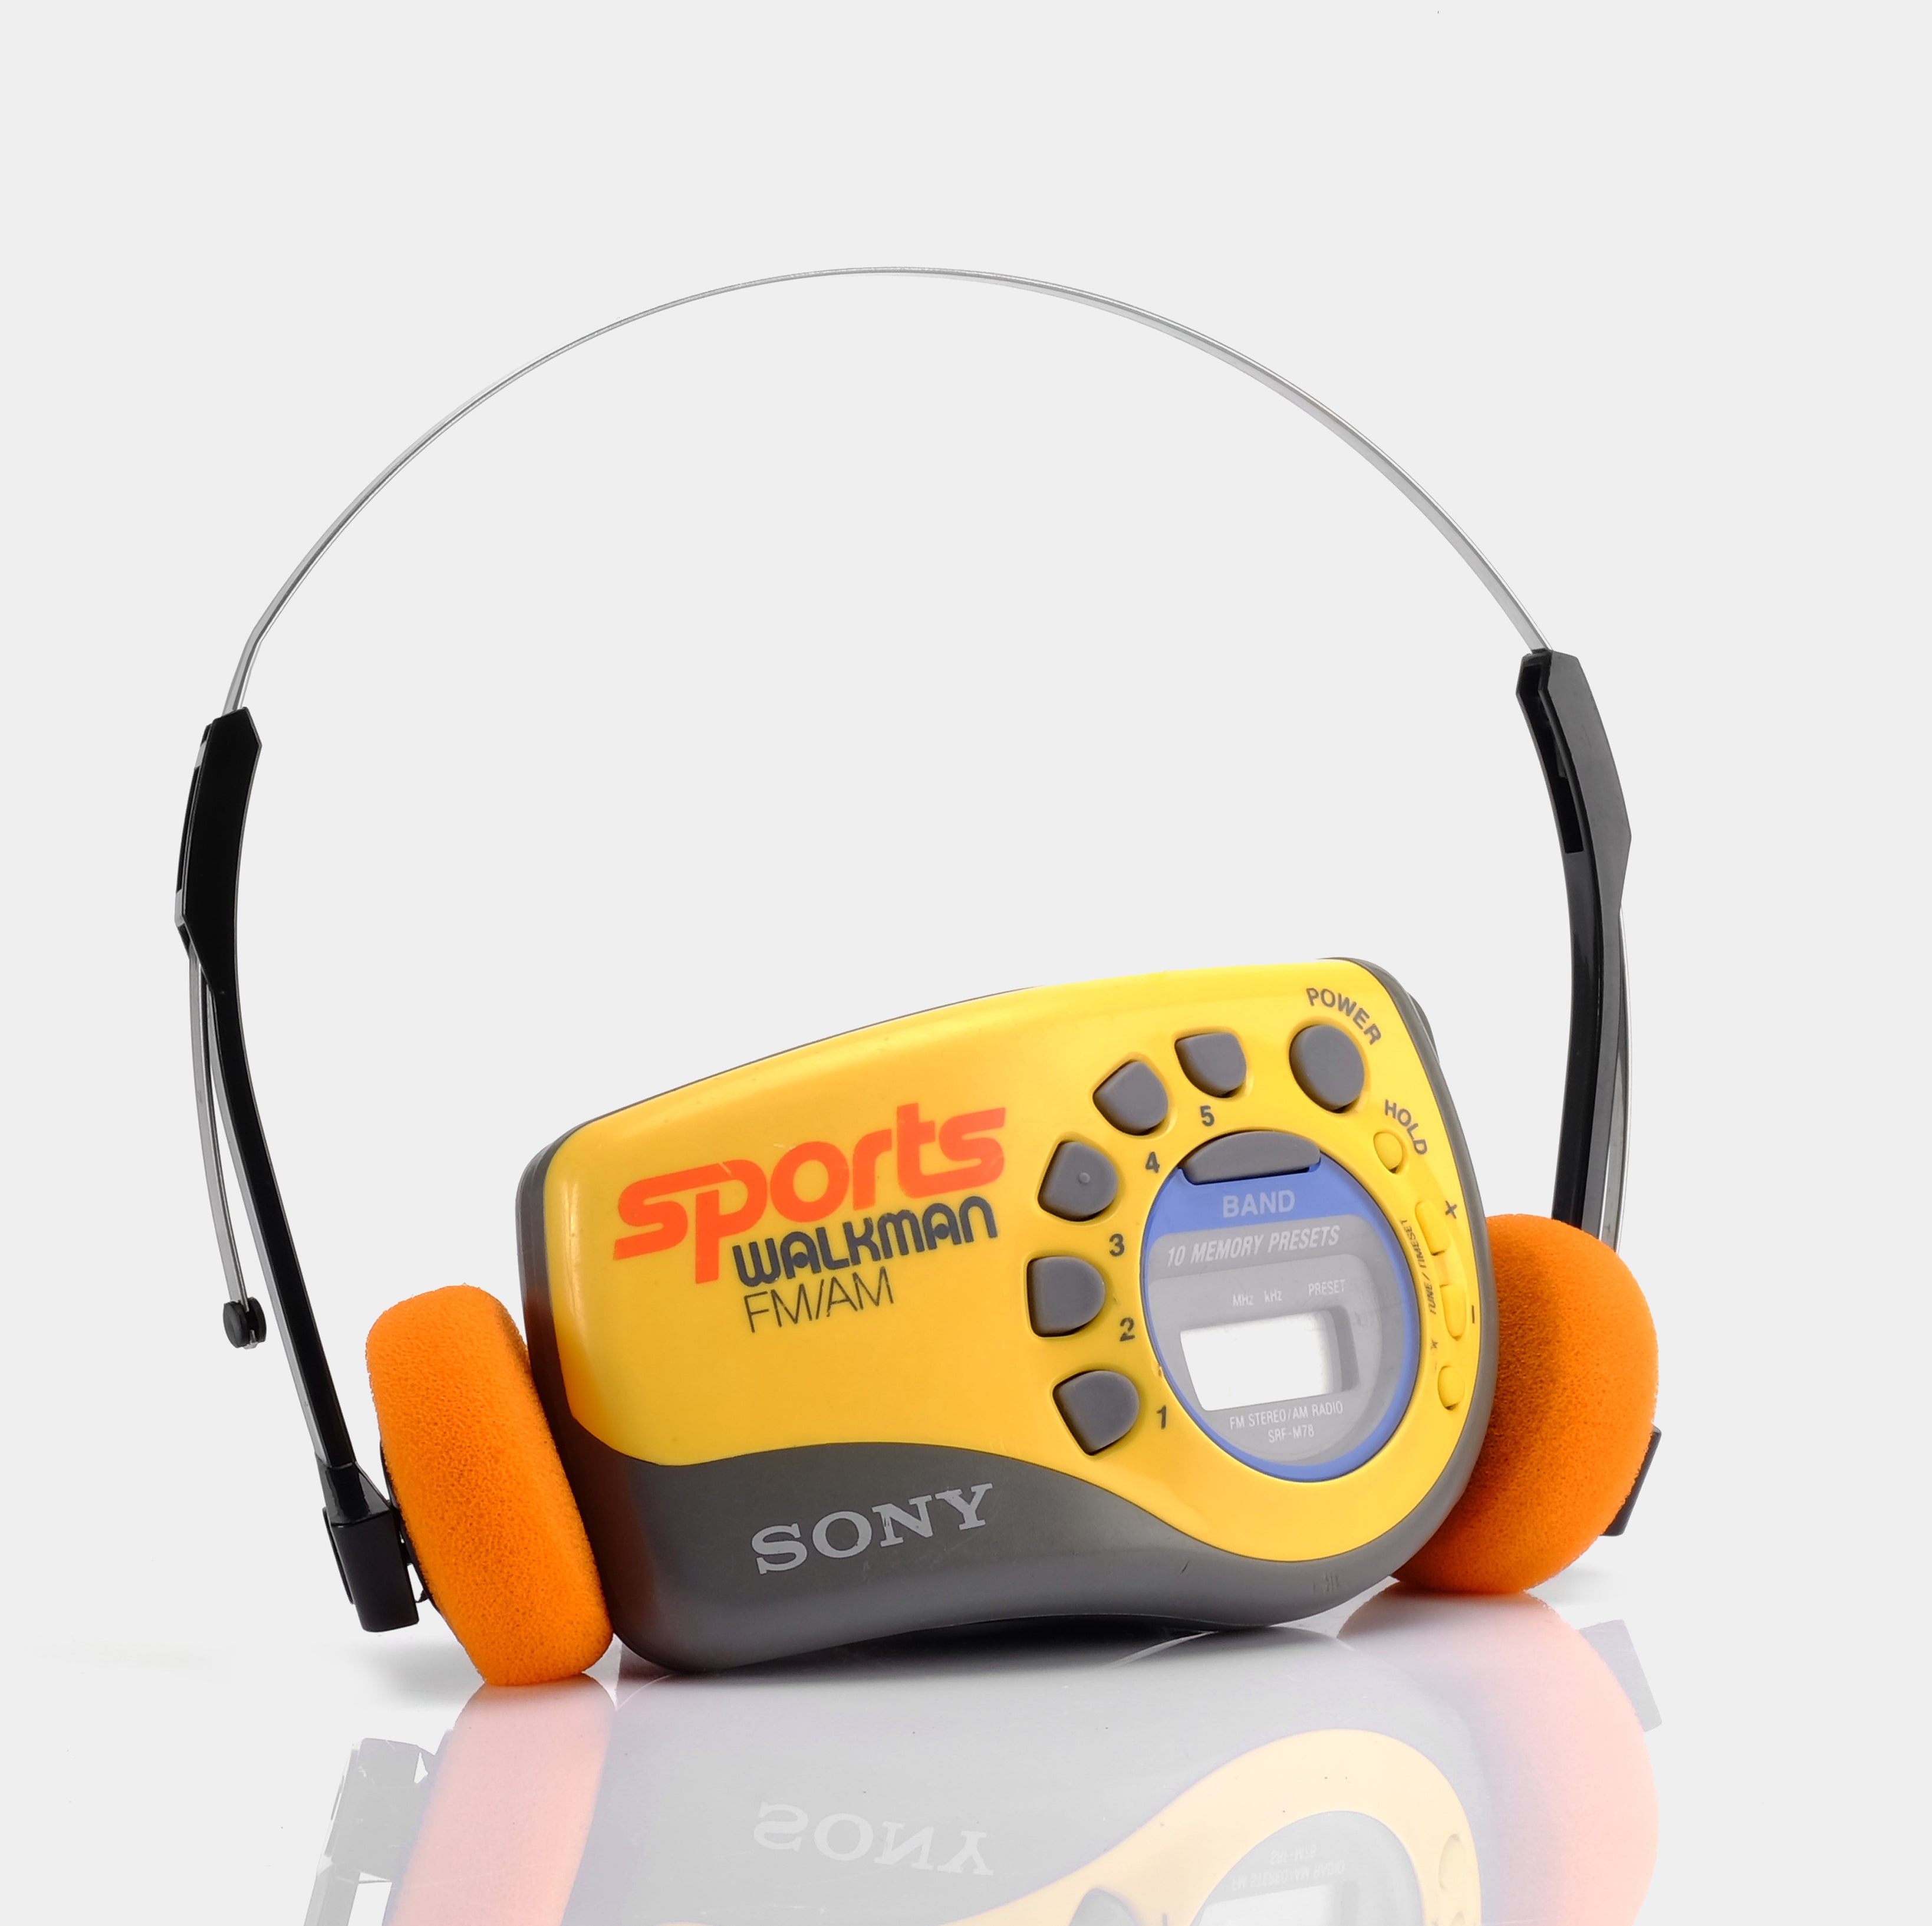 Sony Sports Walkman SRF-M78 AM/FM Stereo Arm Band Radio